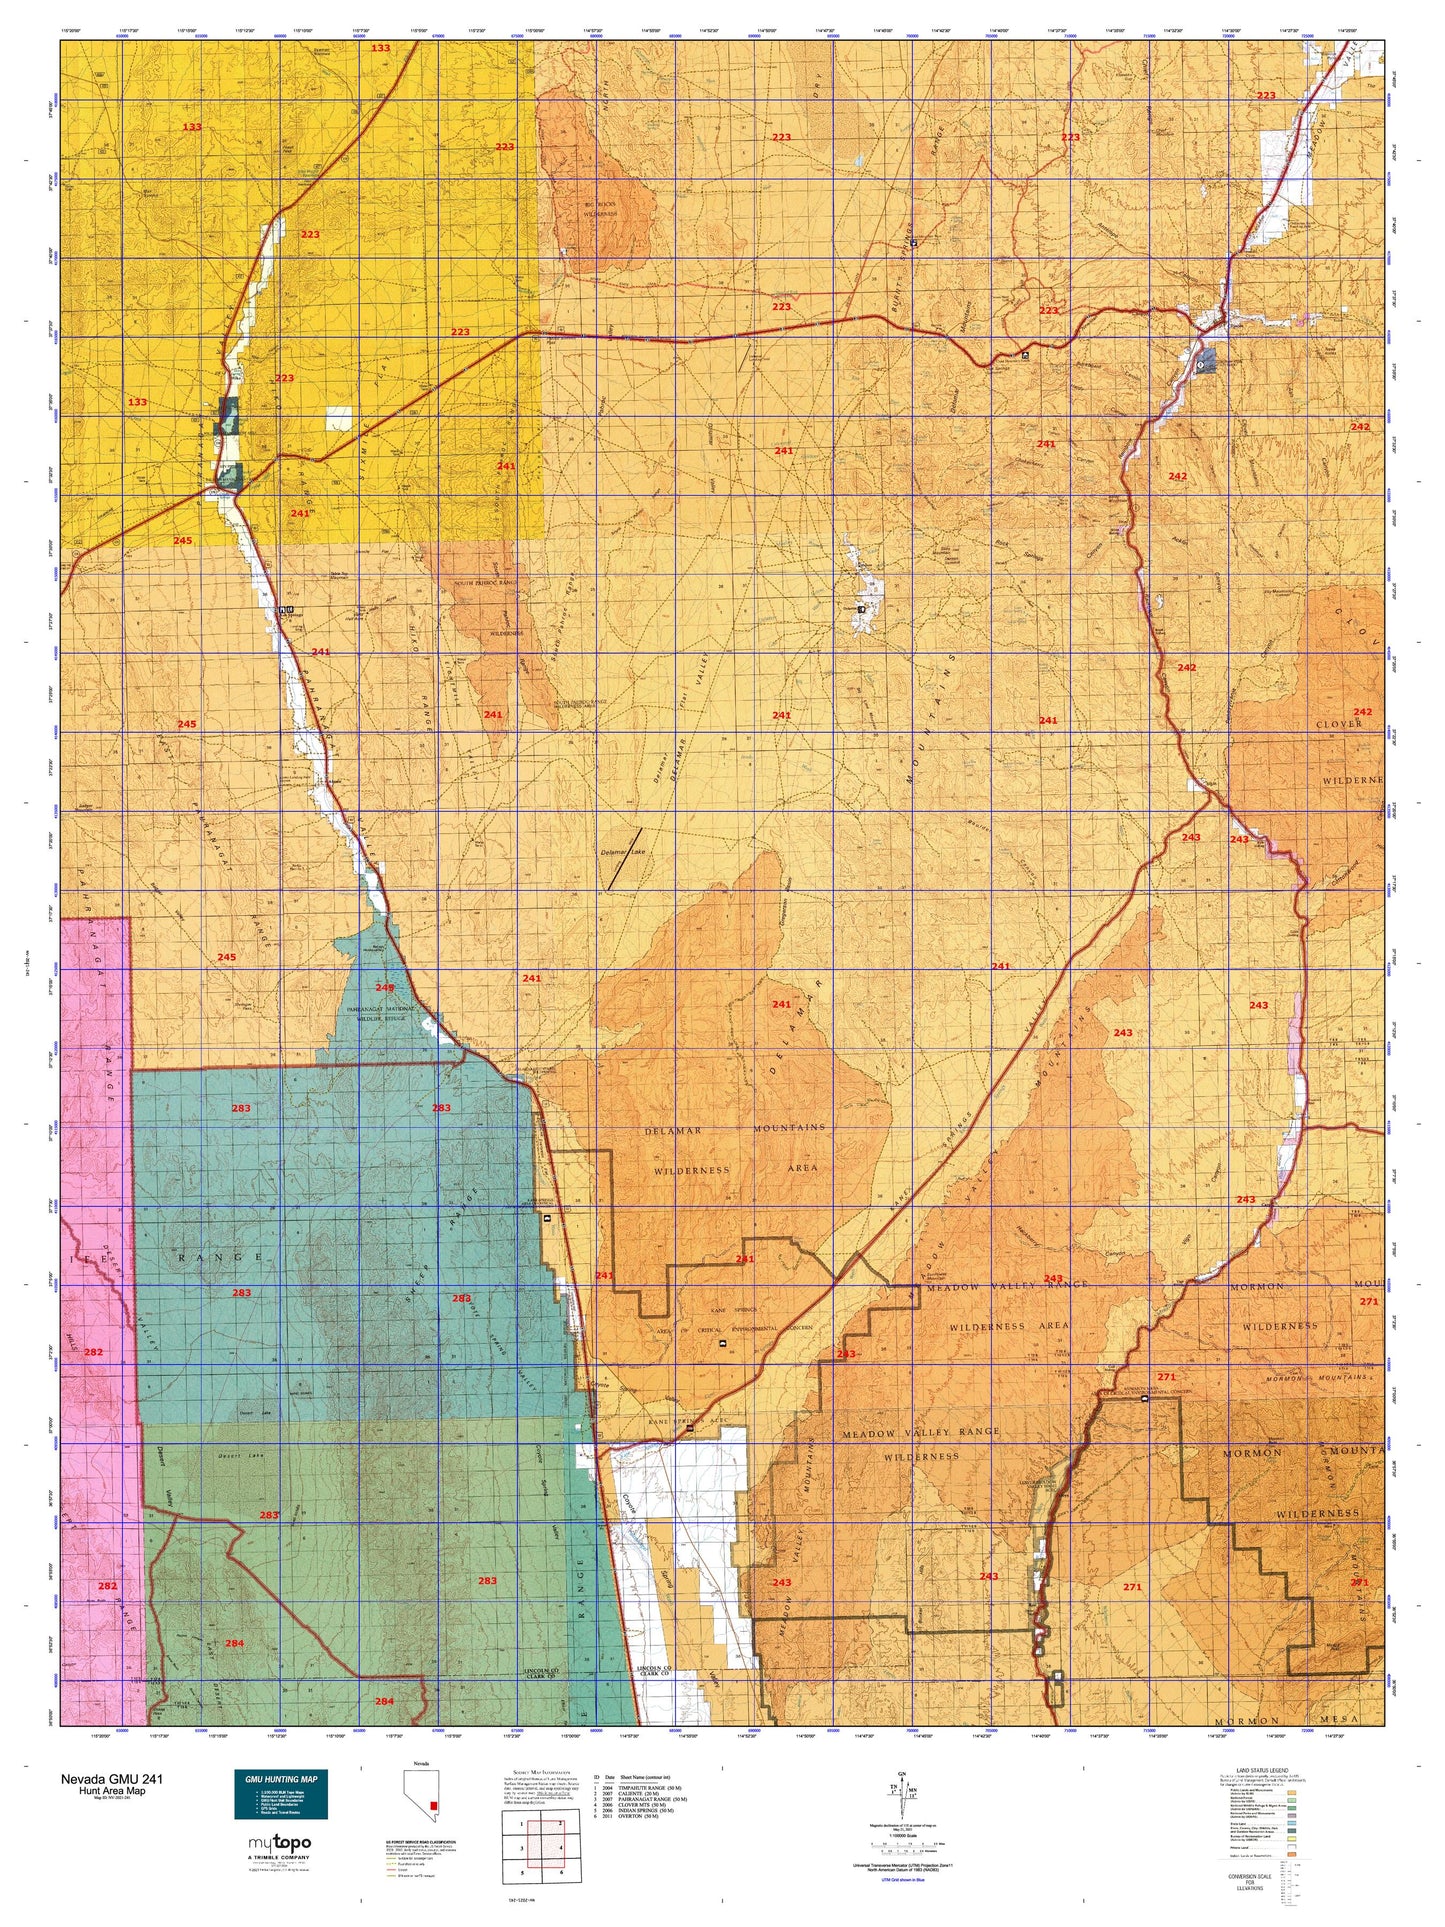 Nevada GMU 241 Map Image